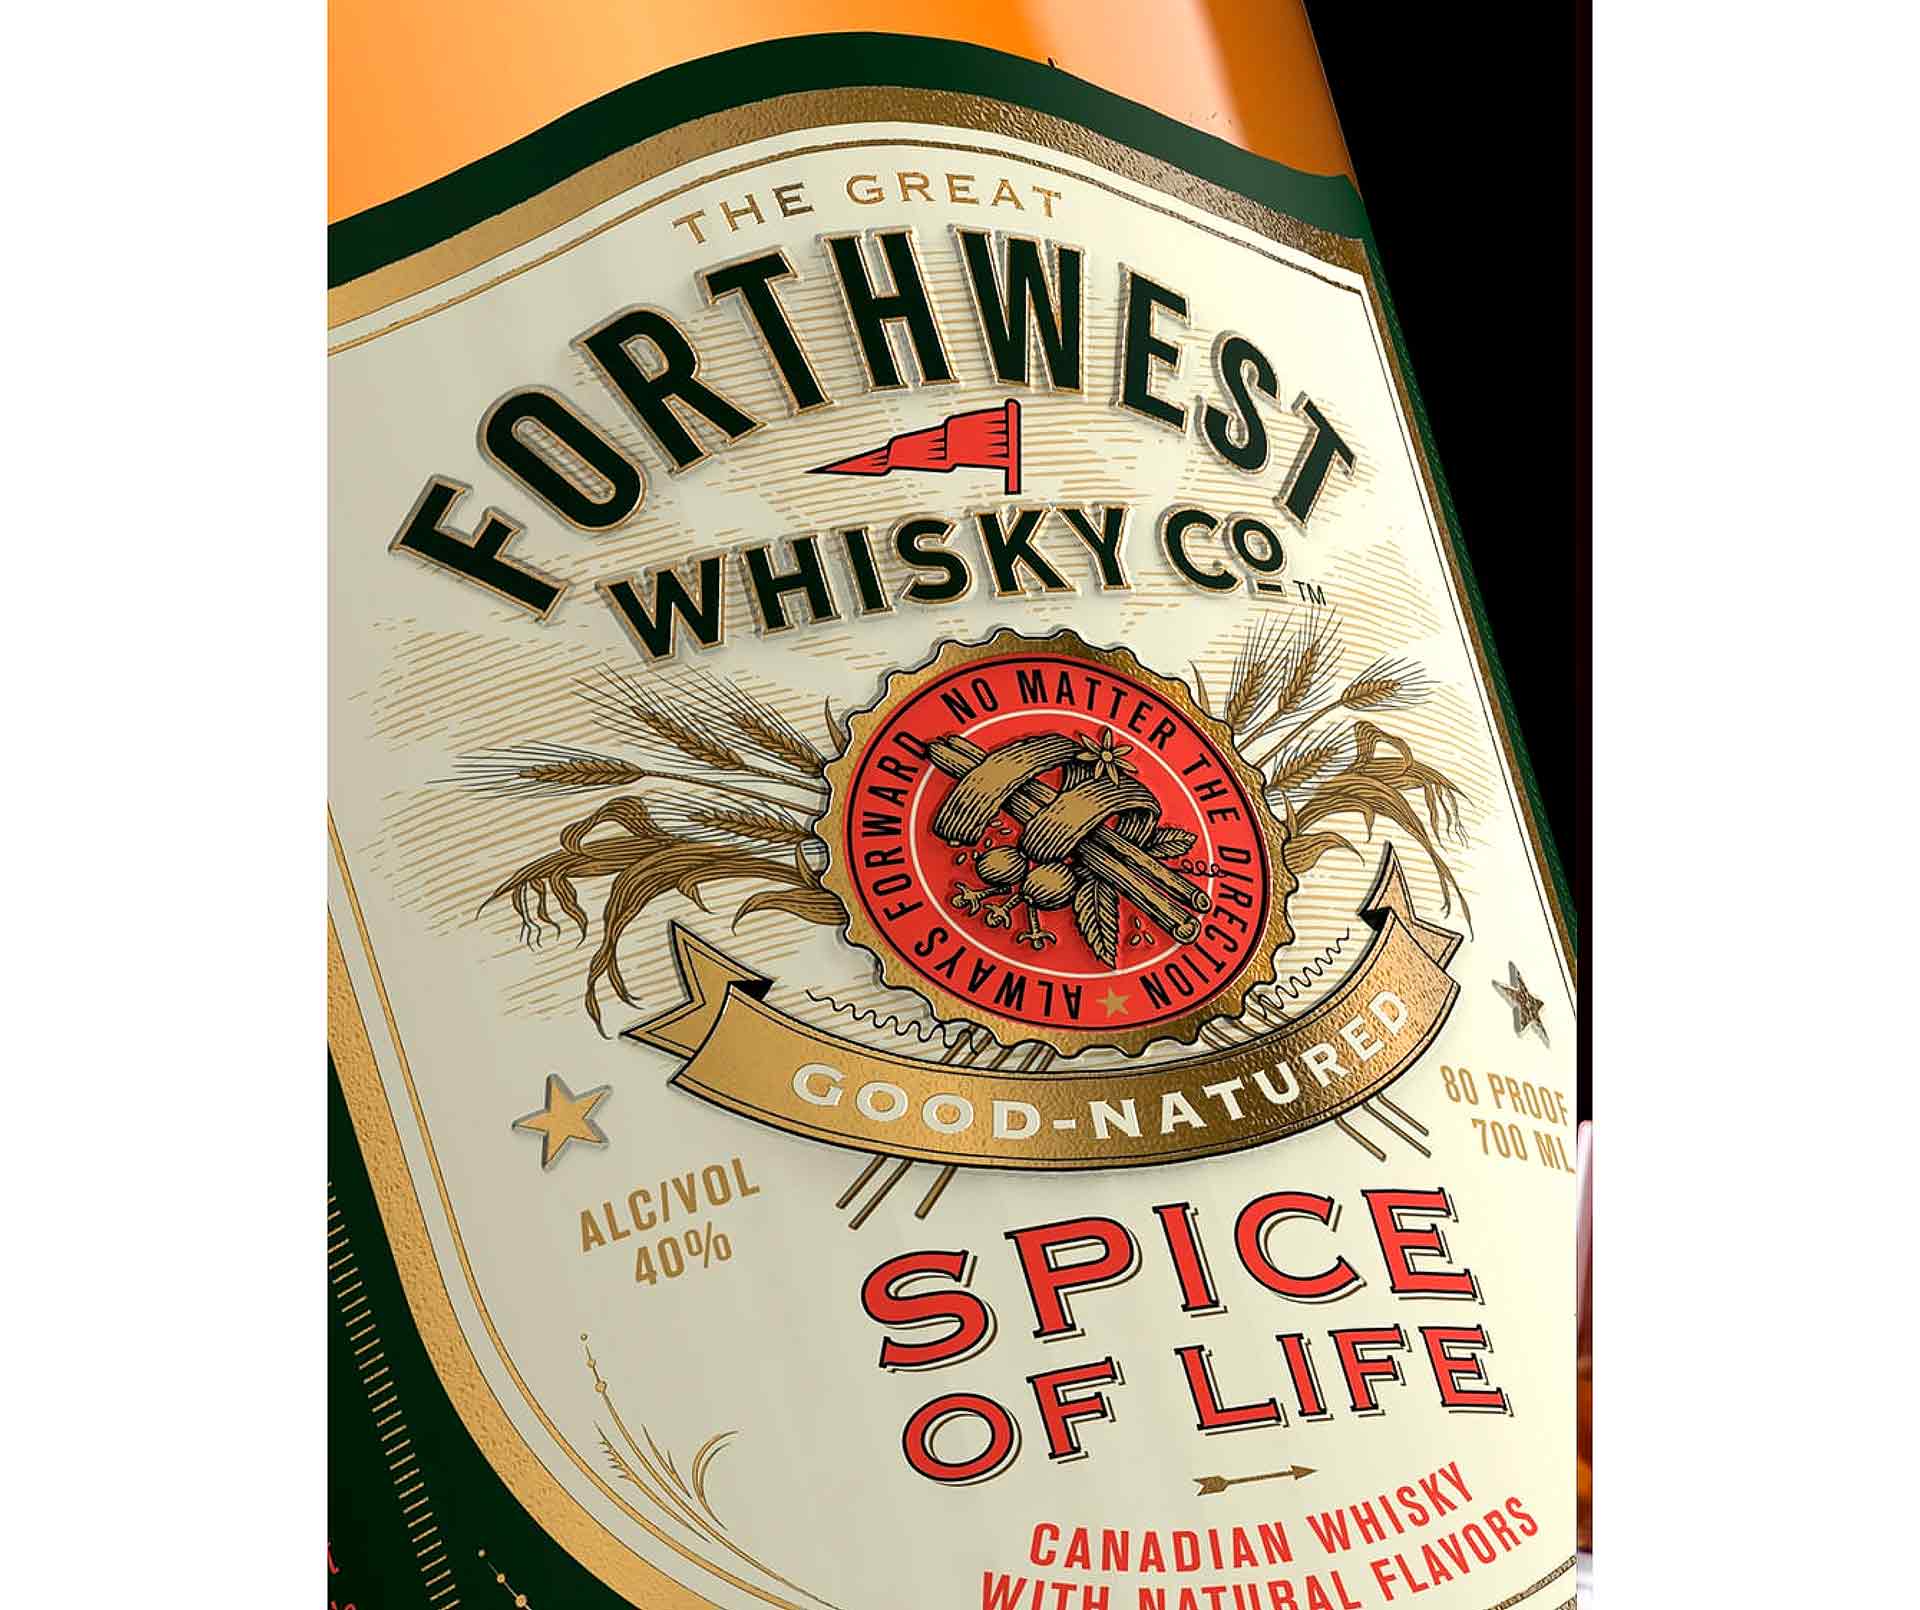 Forthwest Whisky Labels Illustrated by Steven Noble